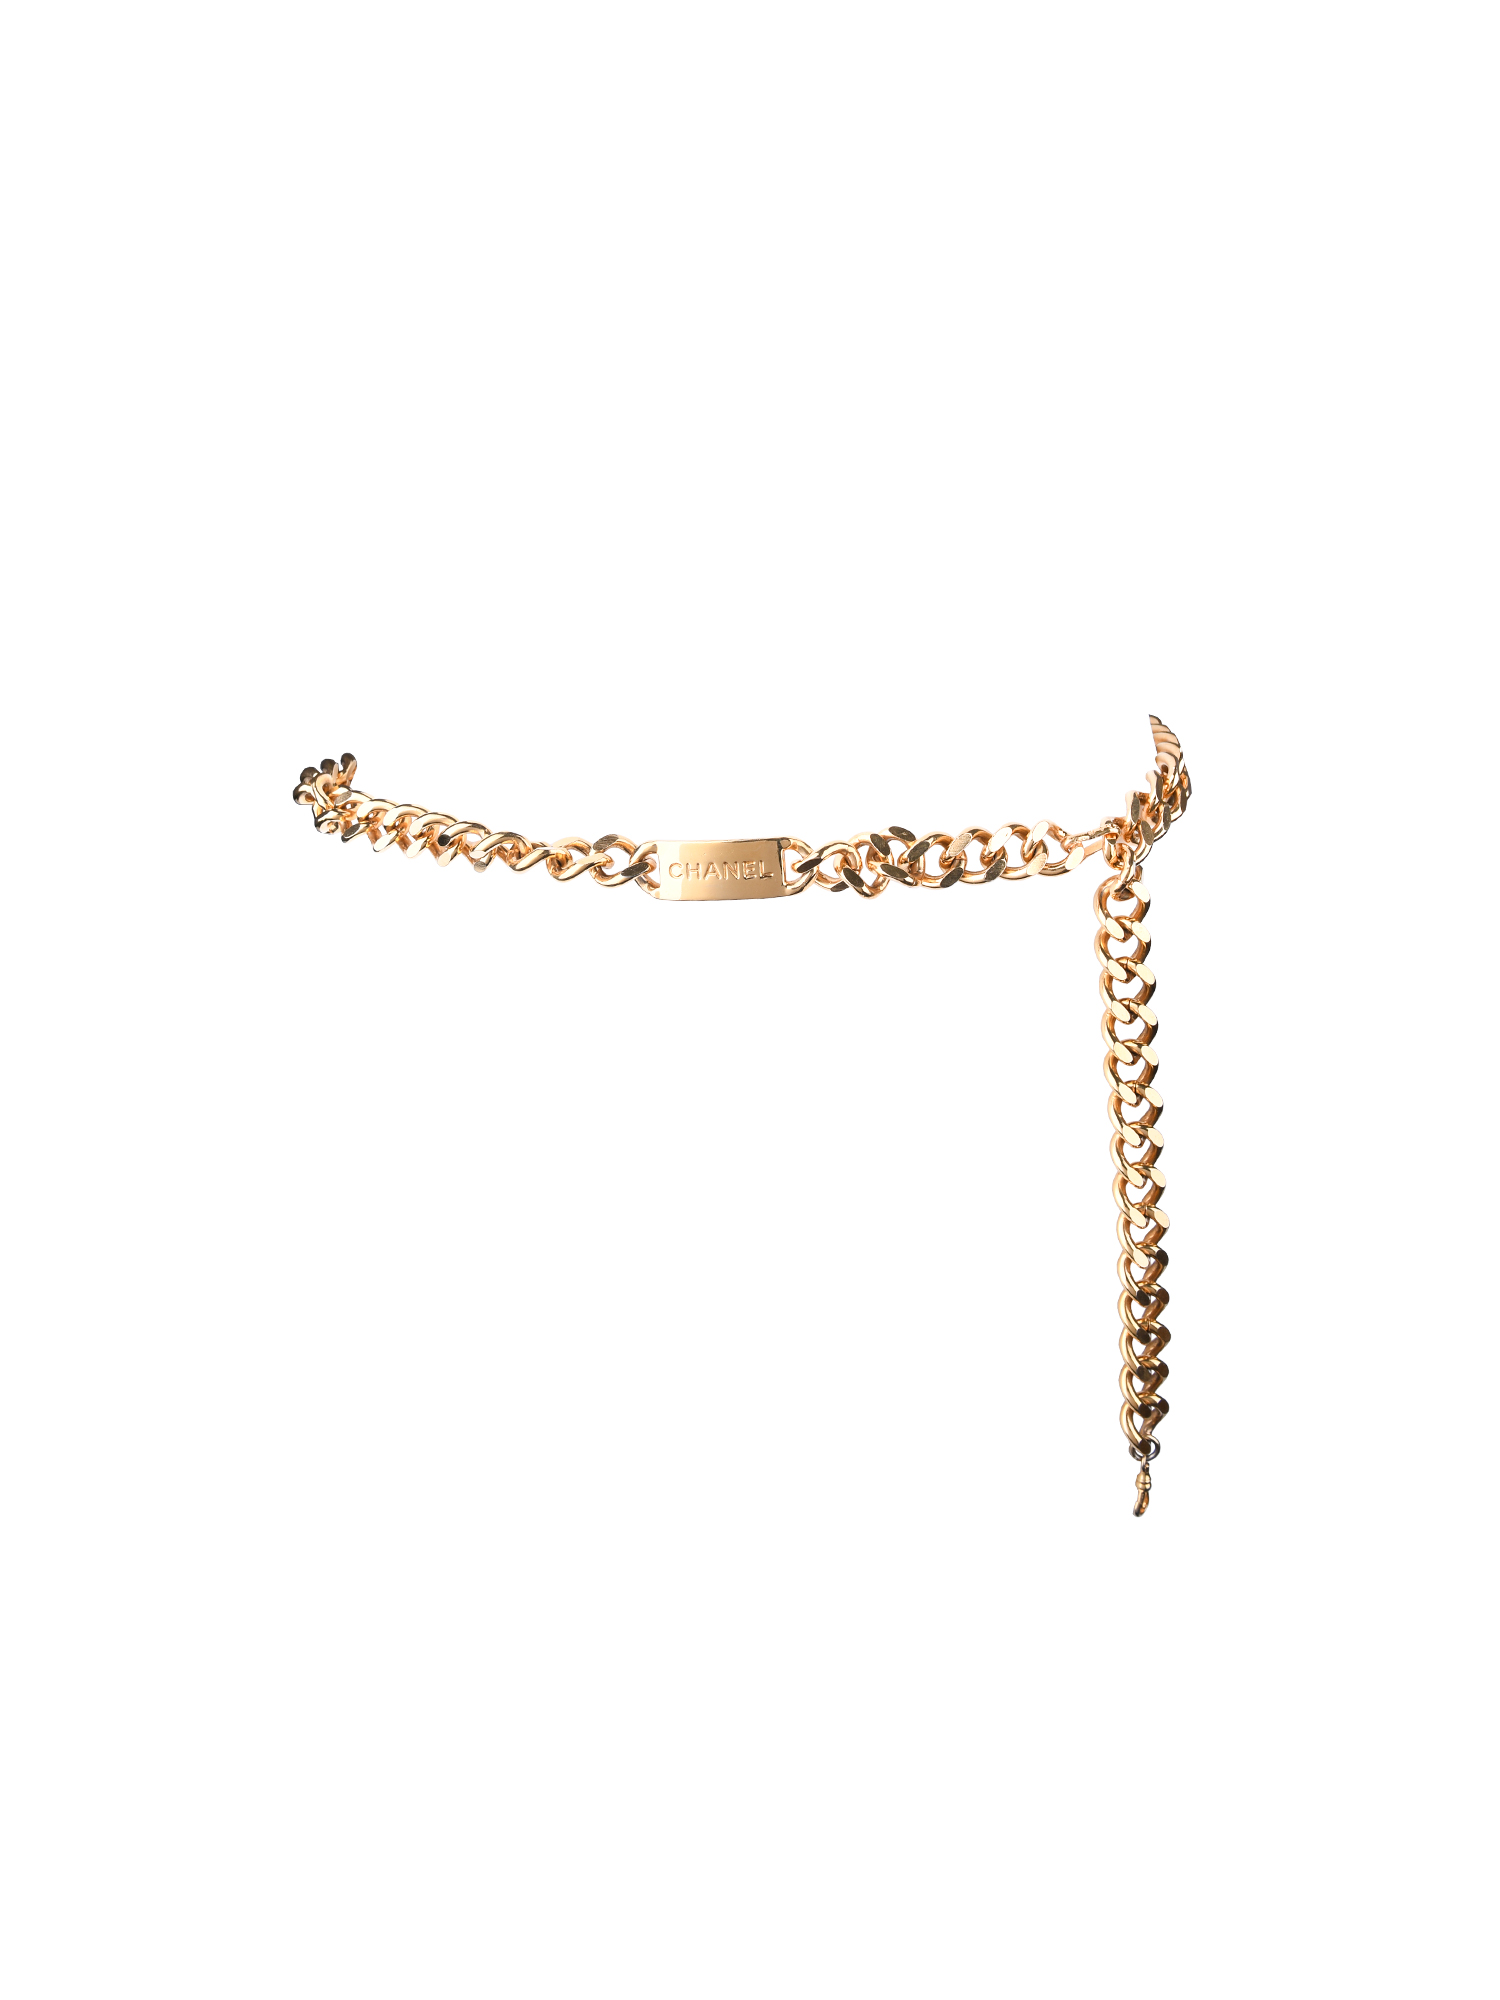 chanel necklace gold logo chain belt